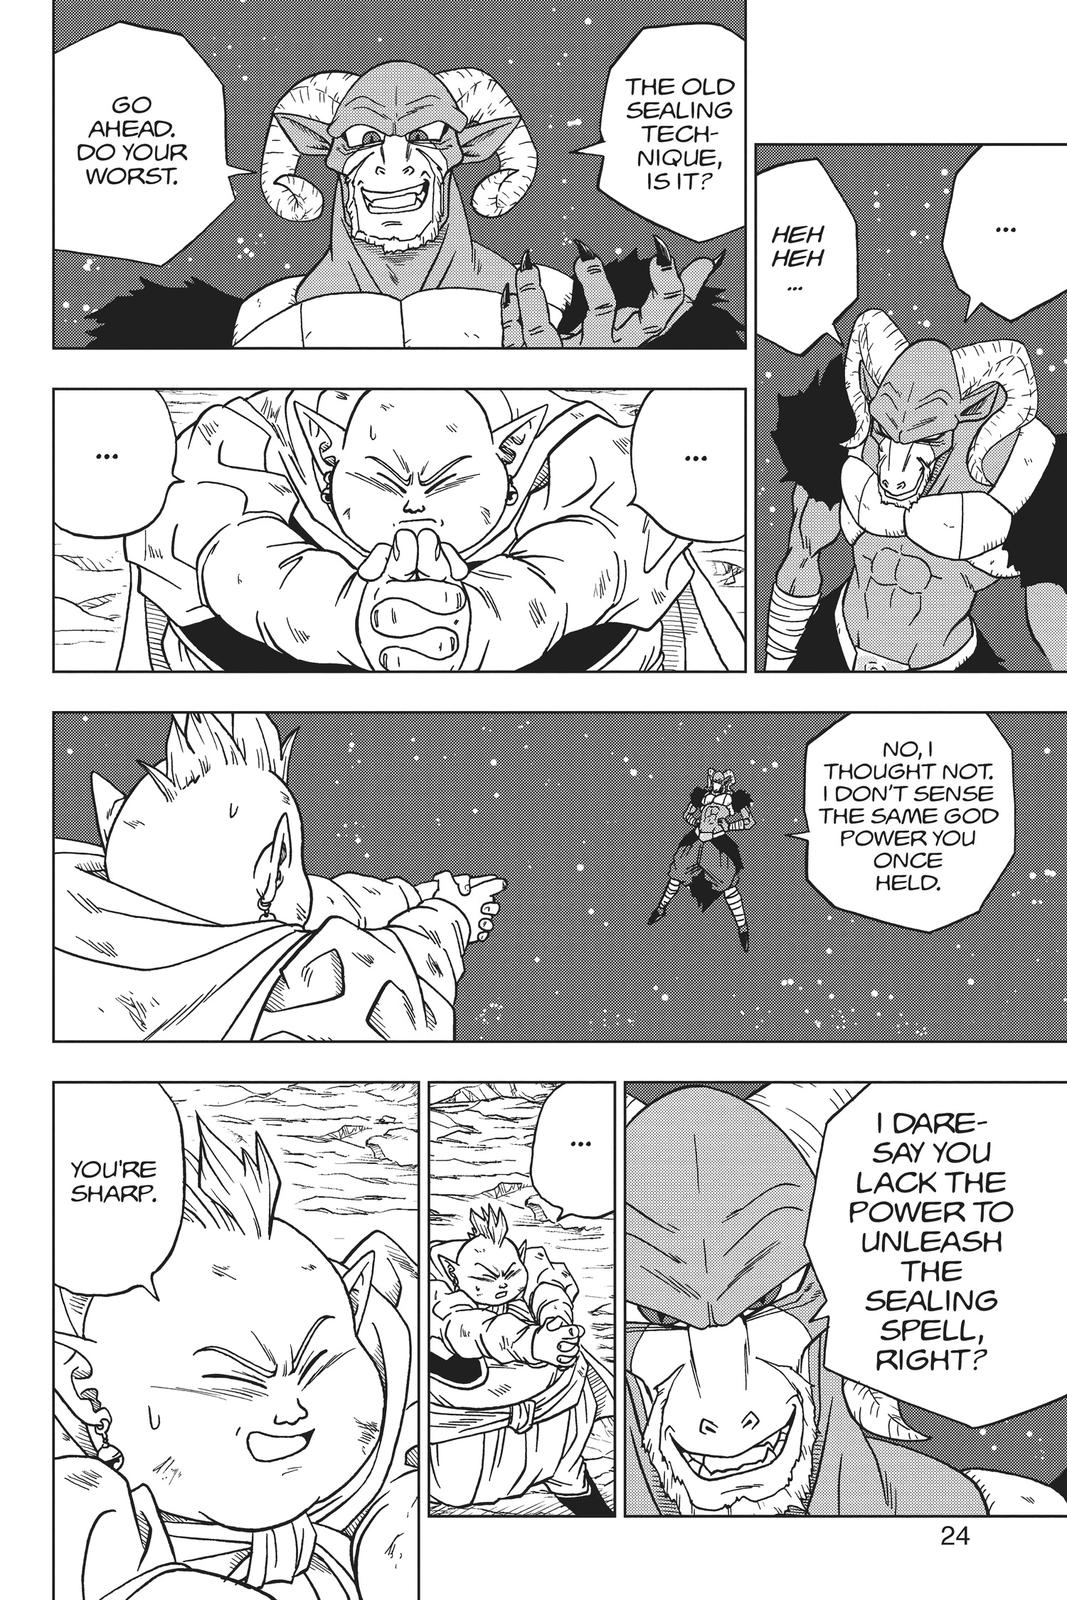  Dragon Ball Super, Chapter 49 image 25